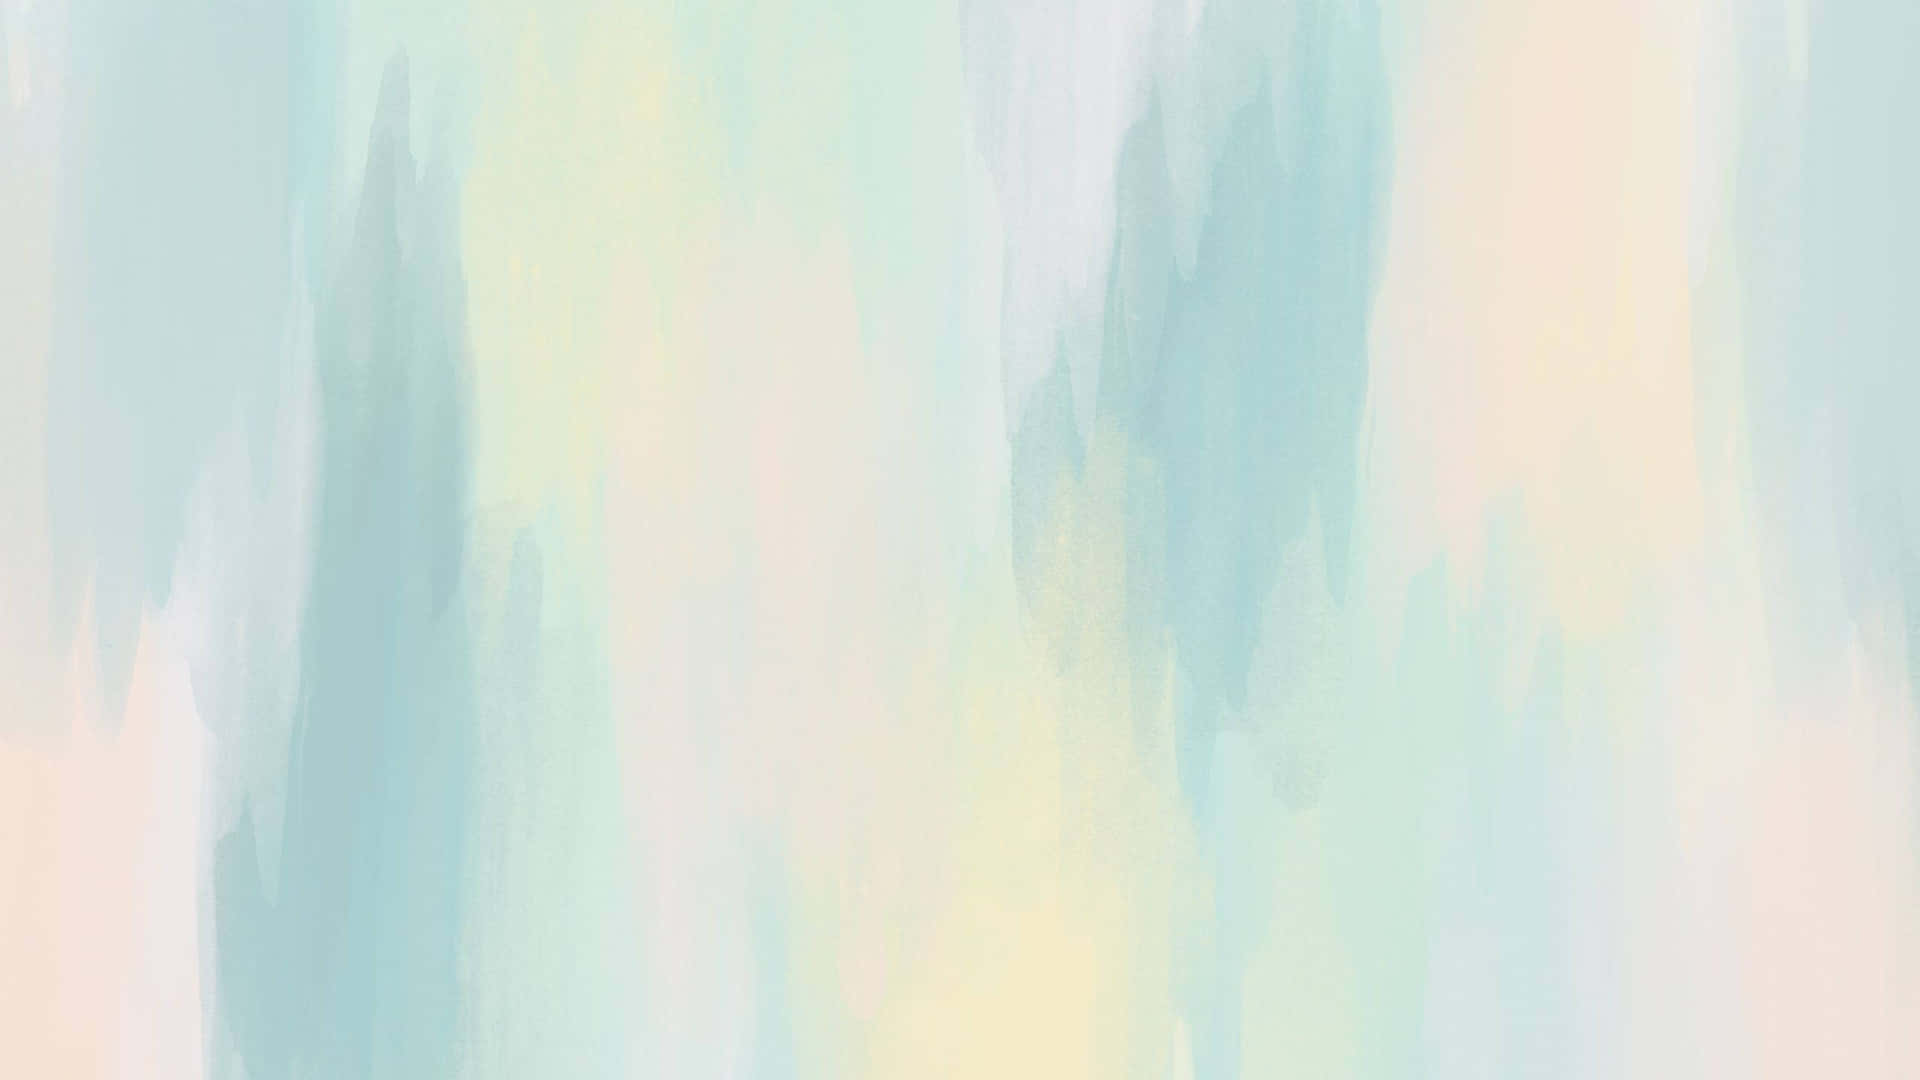 Bunteabstrakte Malerei In Pastellfarben In Aquarell Wallpaper